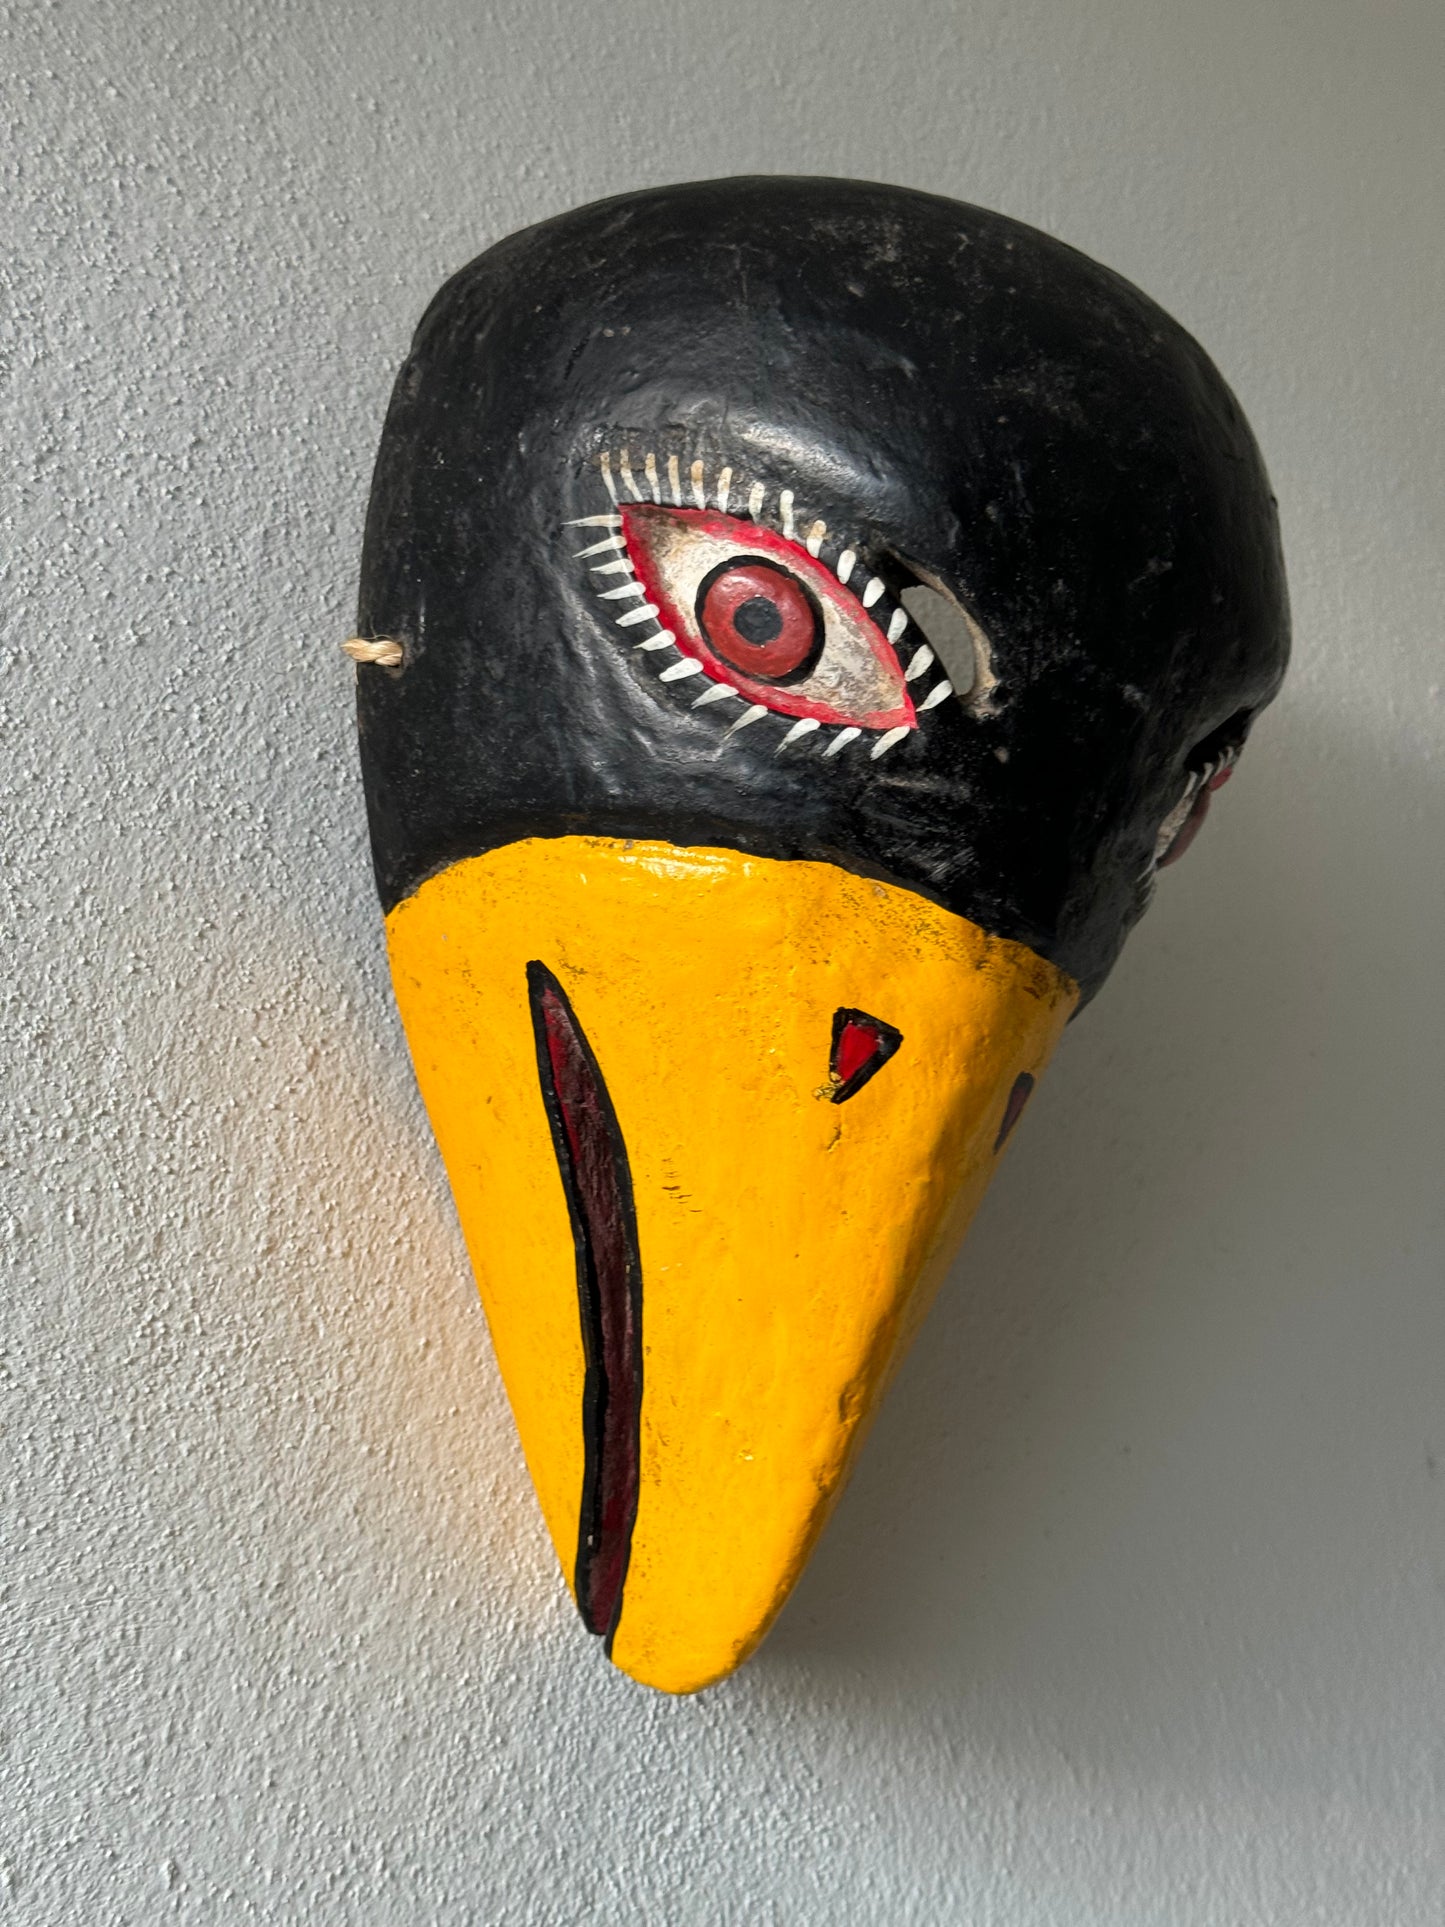 Contemporary Crow Mask From Carpinteros, Hidalgo